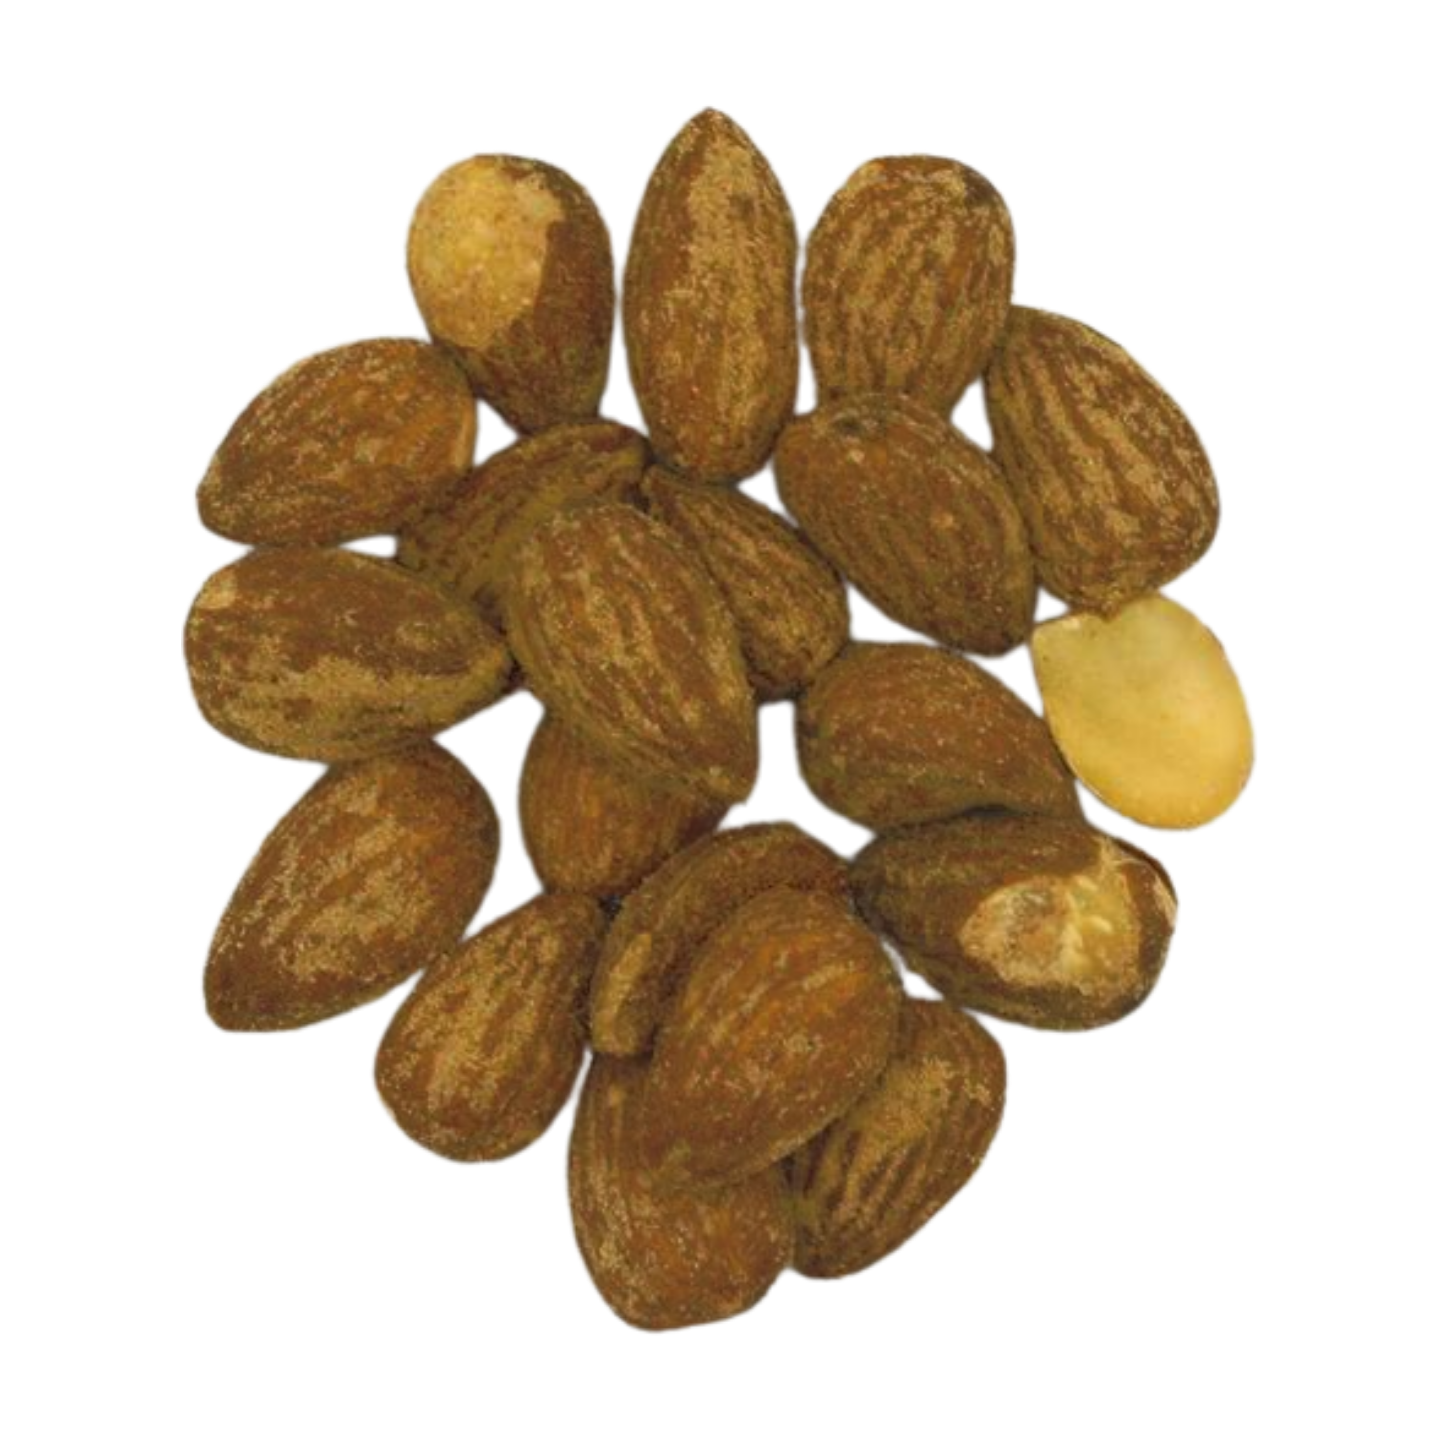 Vegan Jalapeno Cheddar Almonds